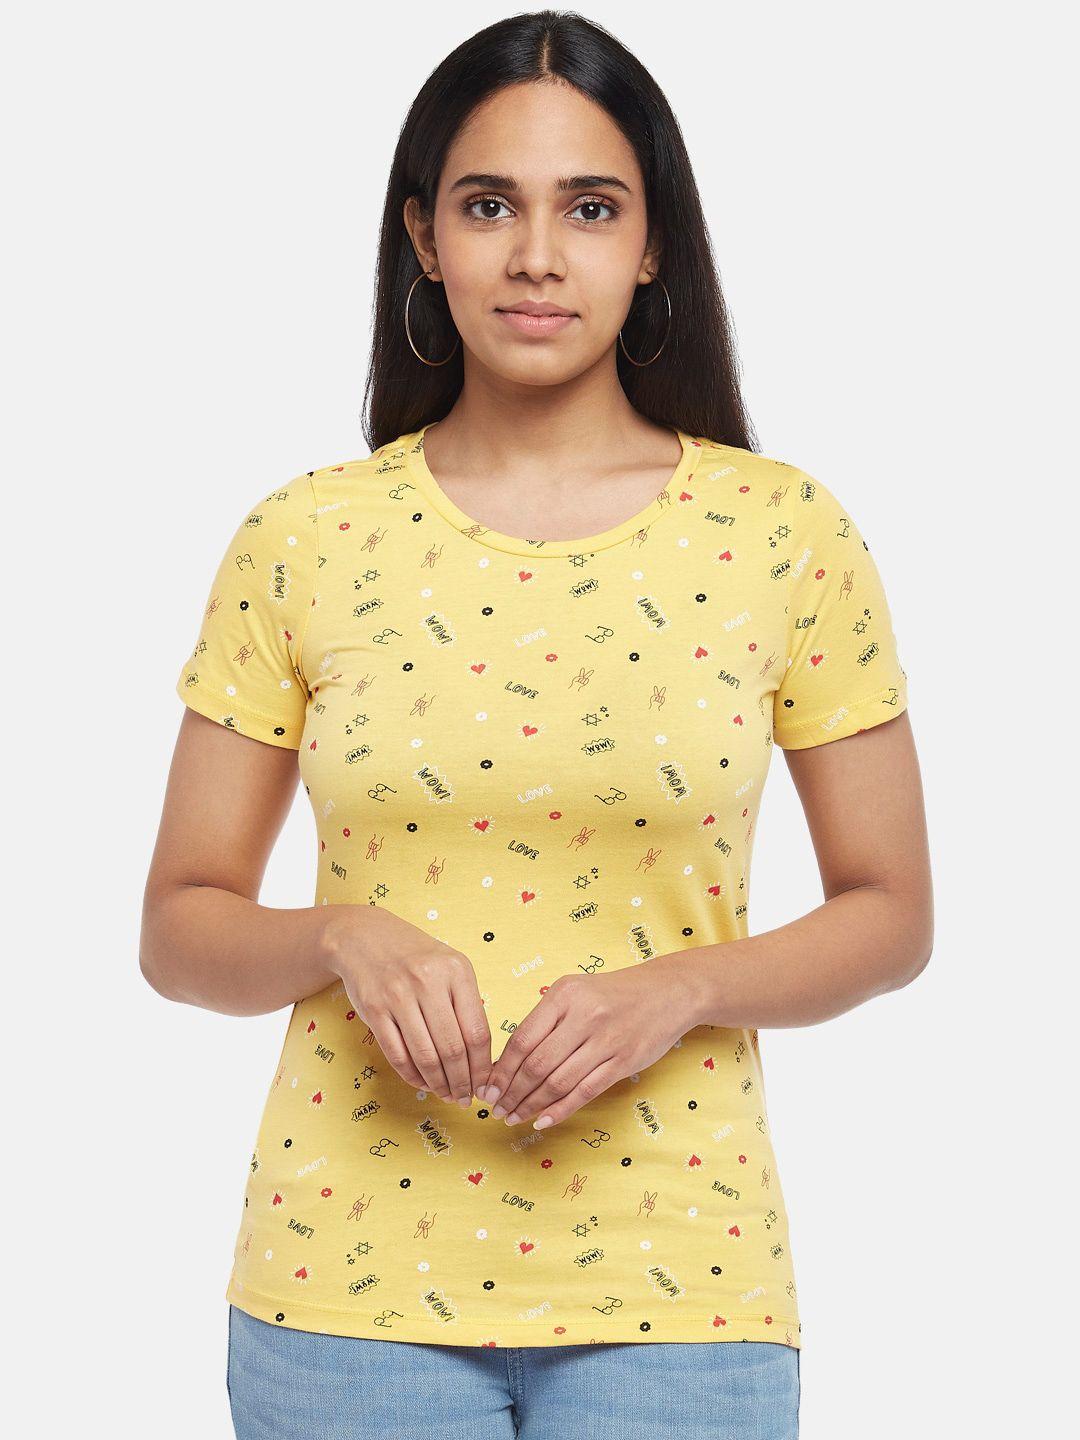 honey by pantaloons women yellow printed t-shirt